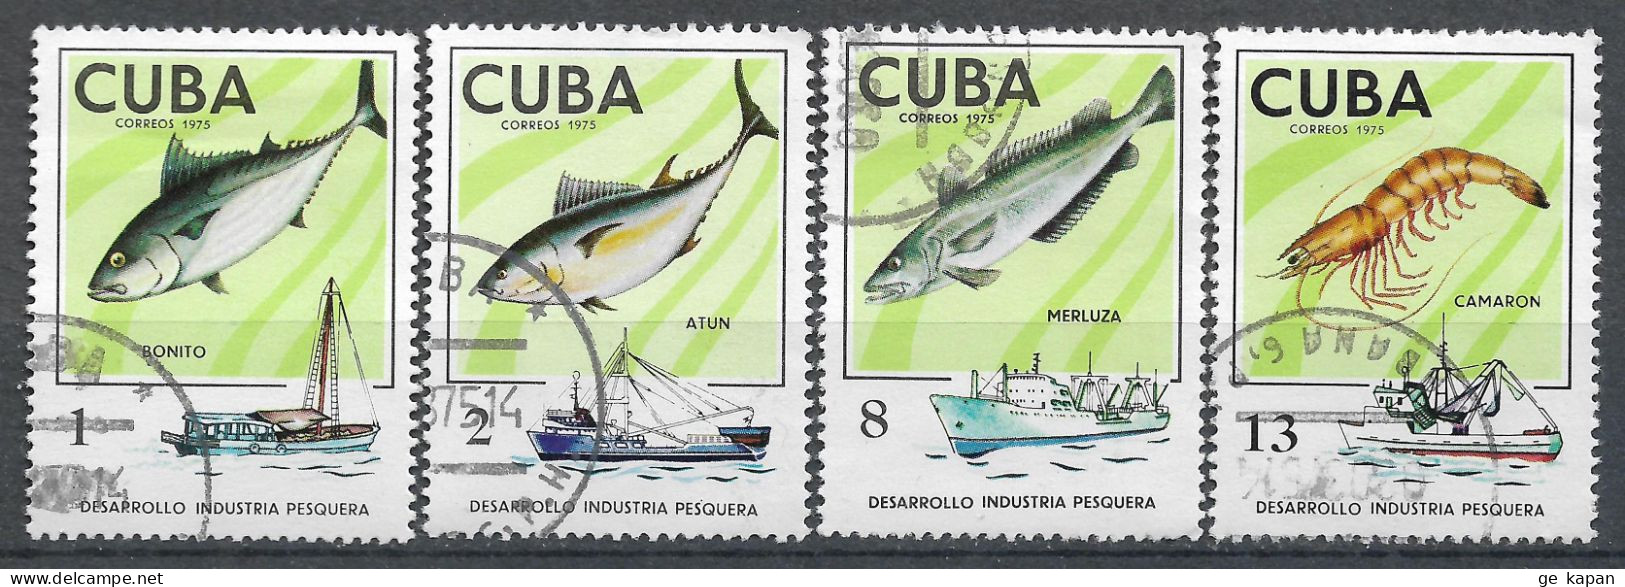 1975 CUBA Set Of 4 Used Stamps (Michel # 2030,2031,2033,2035) CV €1.80 - Usados